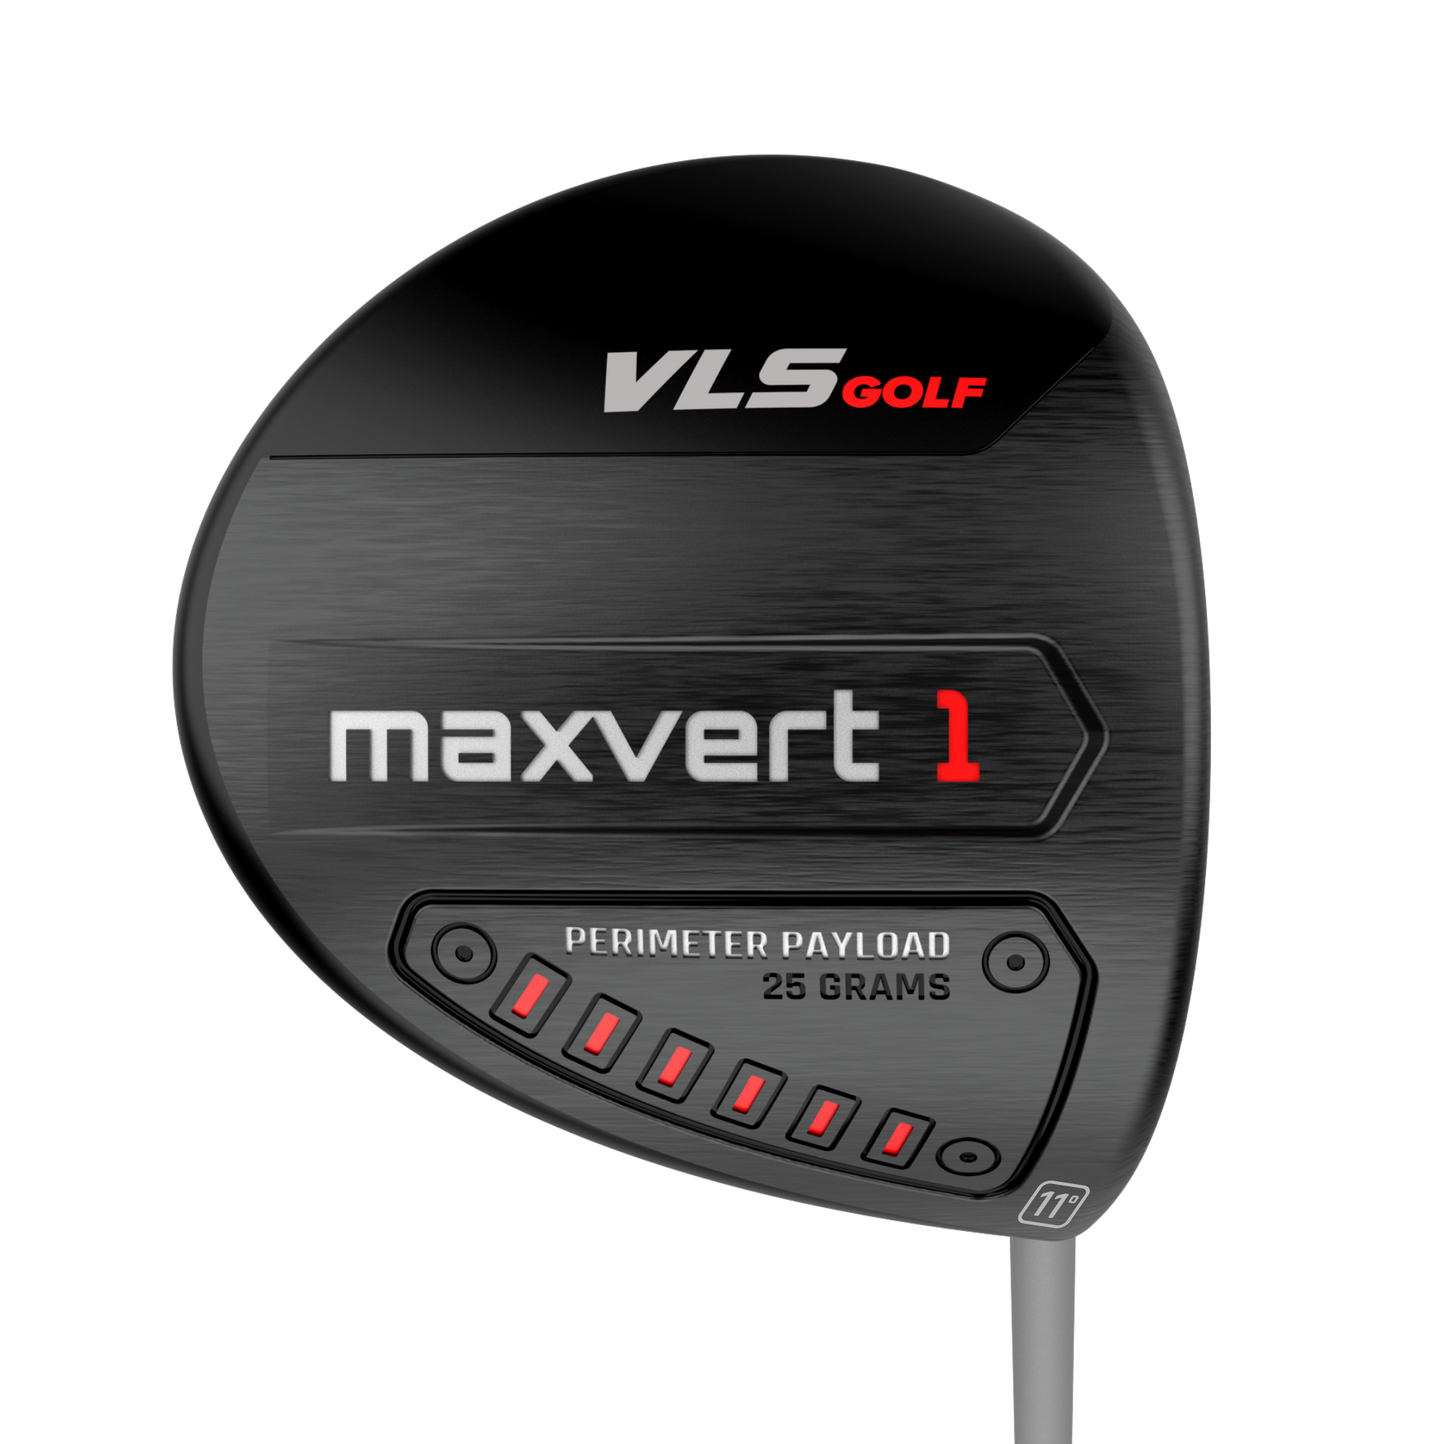 VLS Maxvert 1 Driver